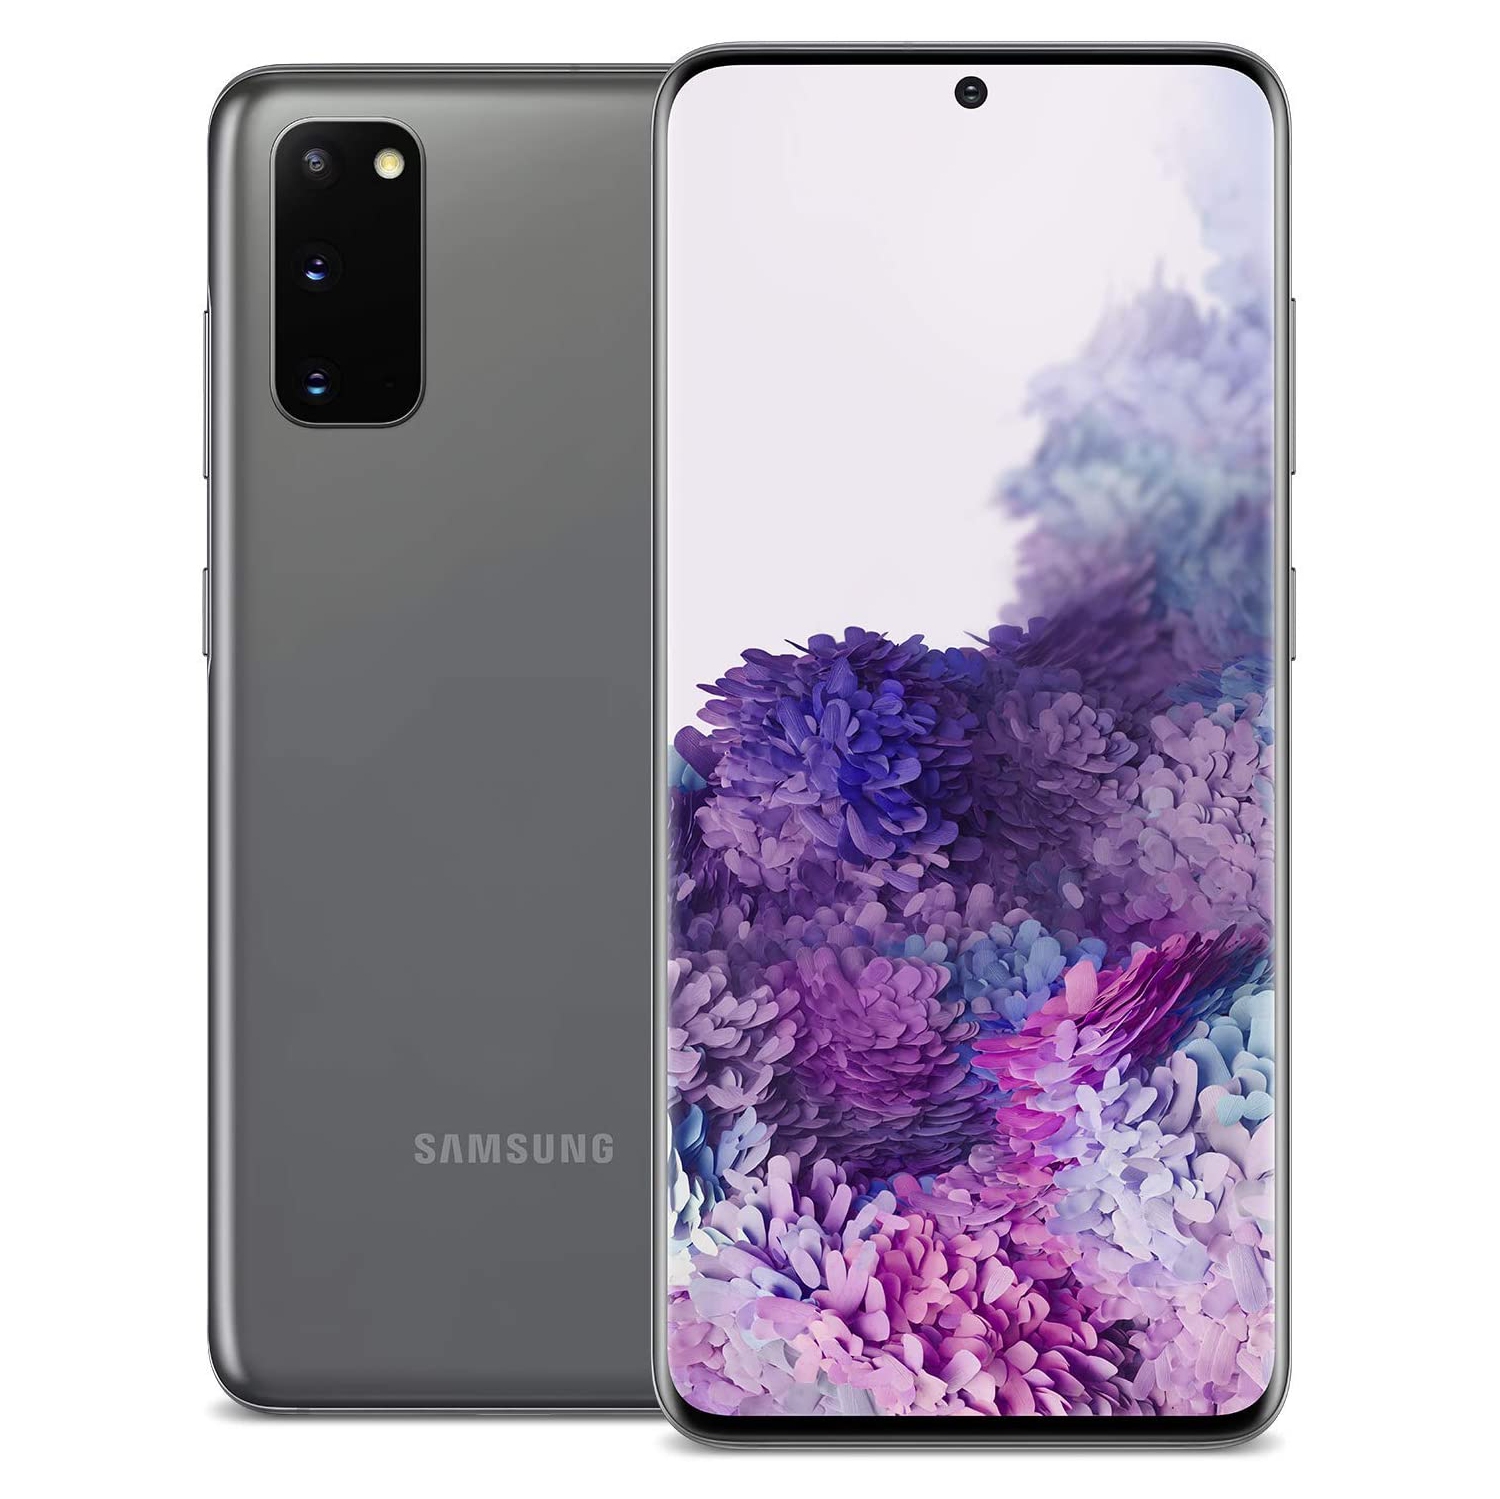 Samsung Galaxy S20 5G 128GB (SM-G981W) - Factory Unlocked Smartphone - Cosmic Gray - Brand New